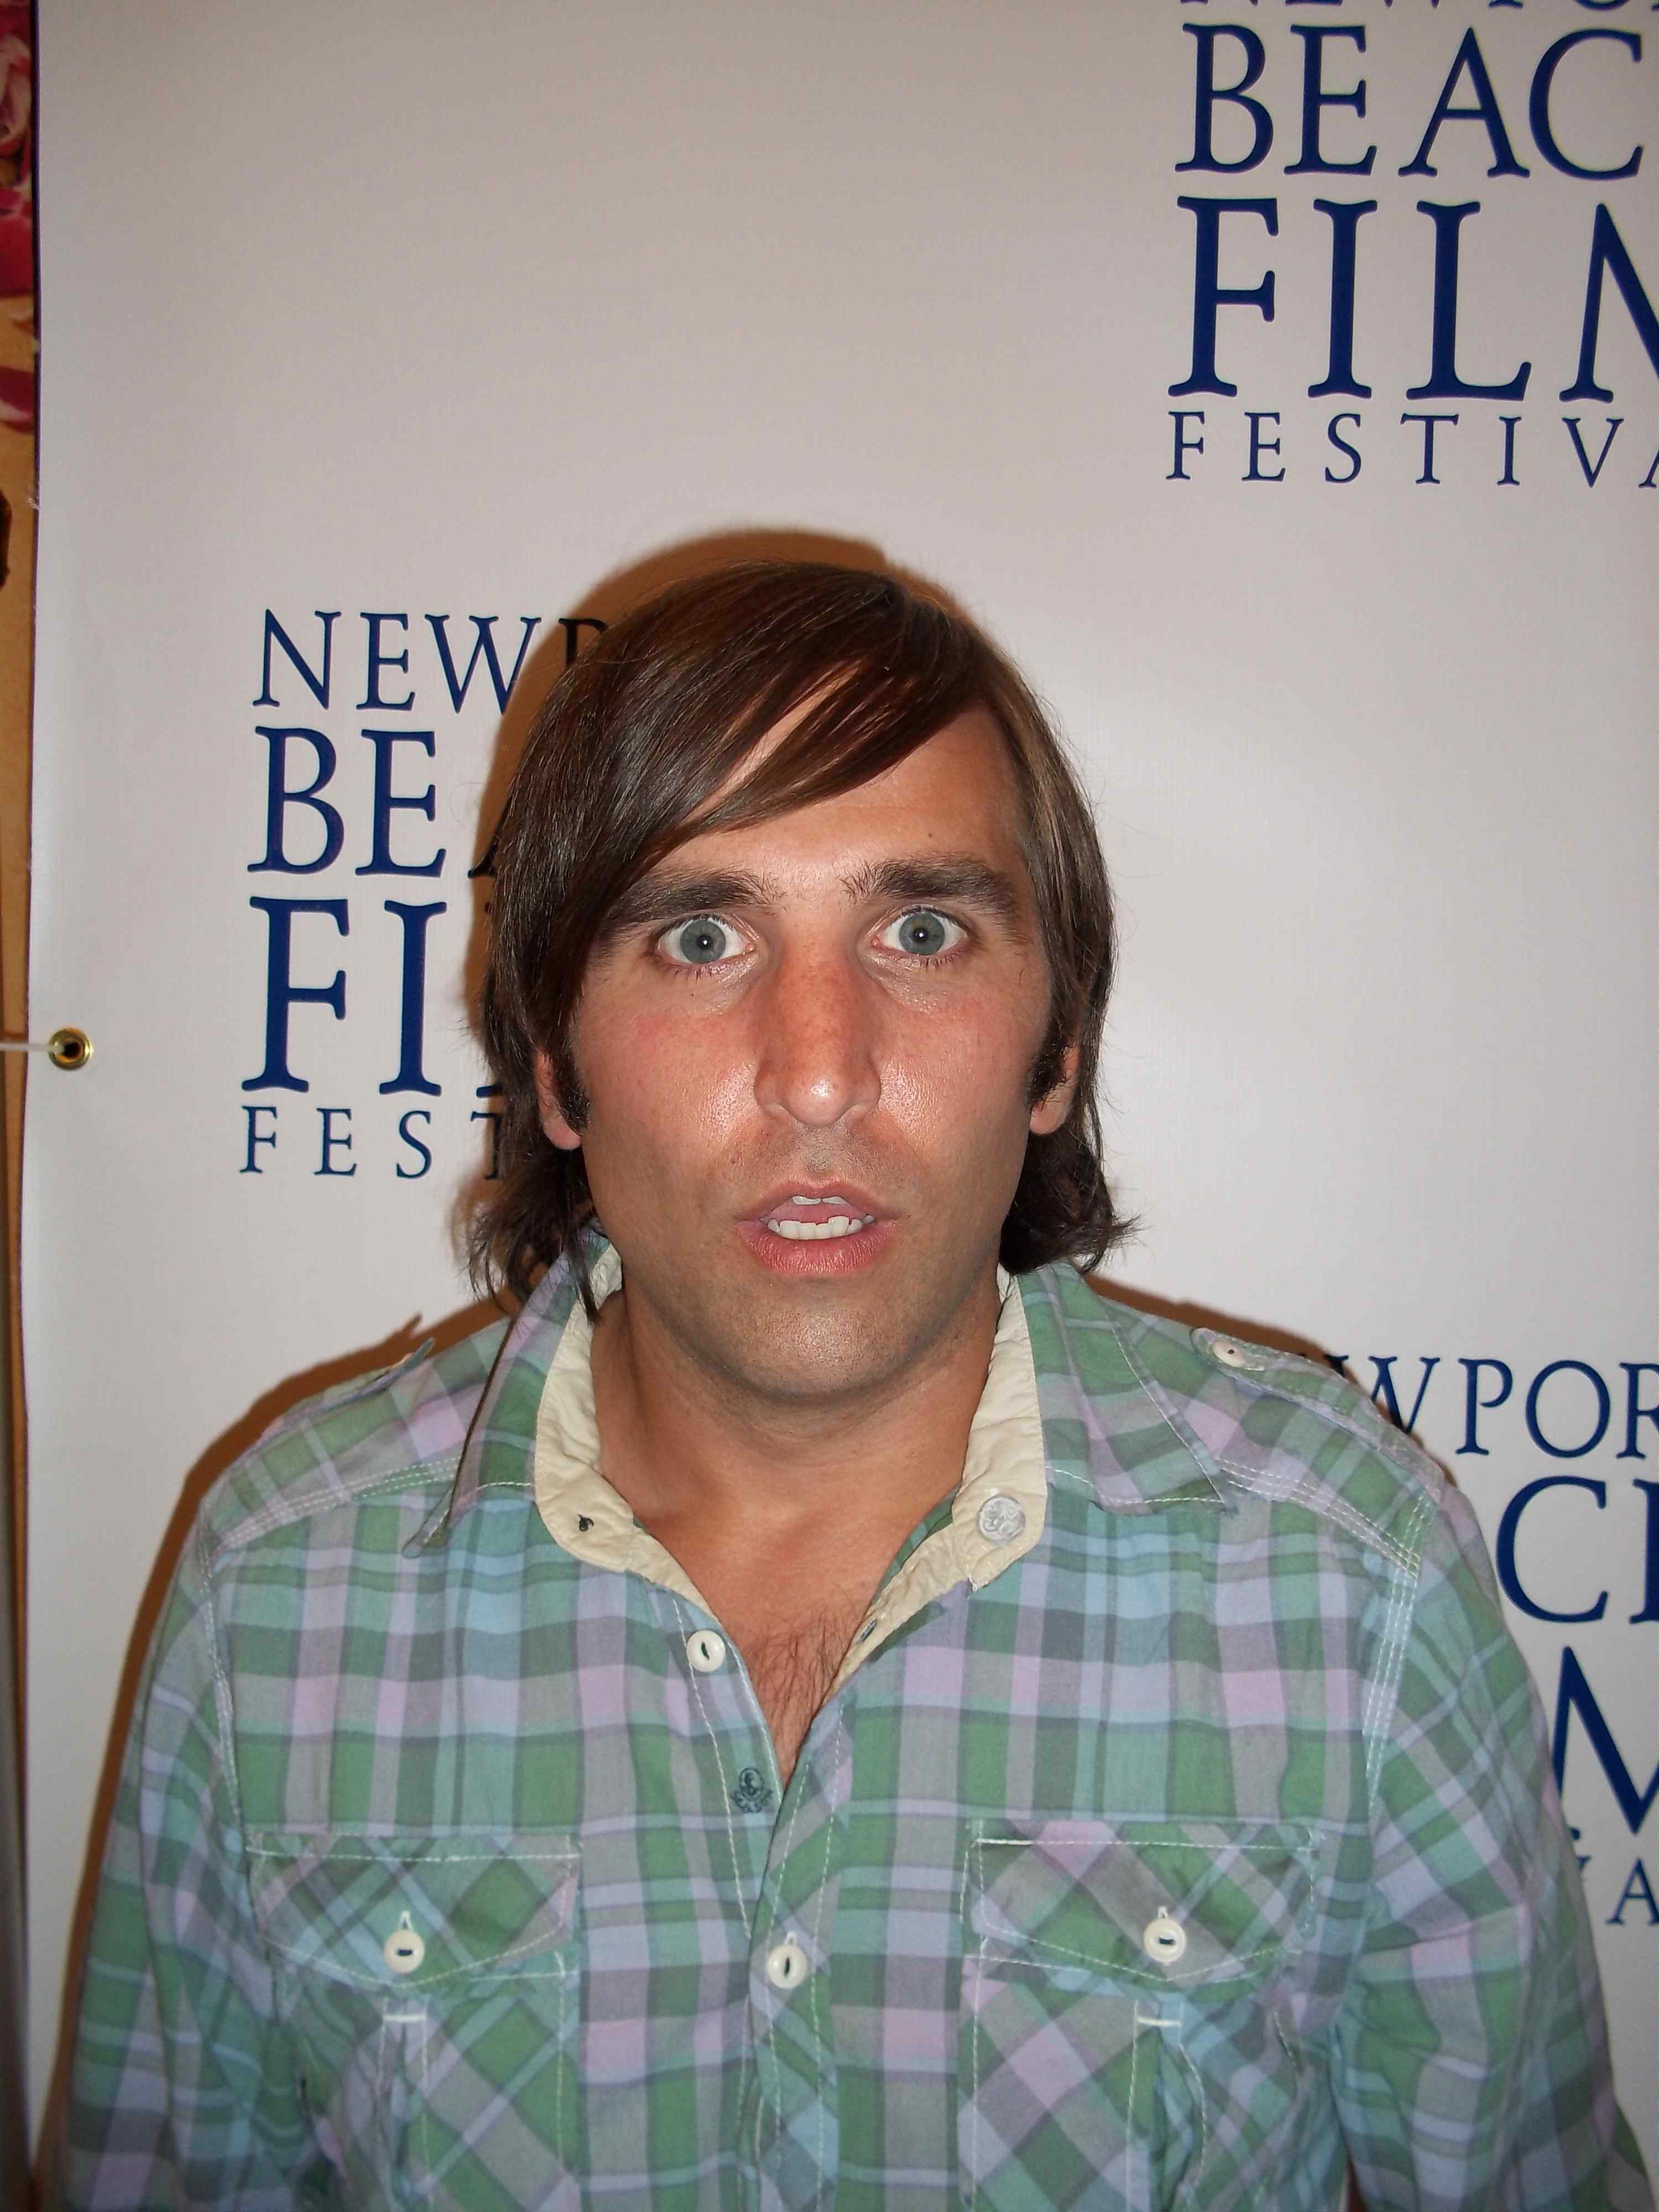 At the 2010 Newport Beach Film Festival screening of 